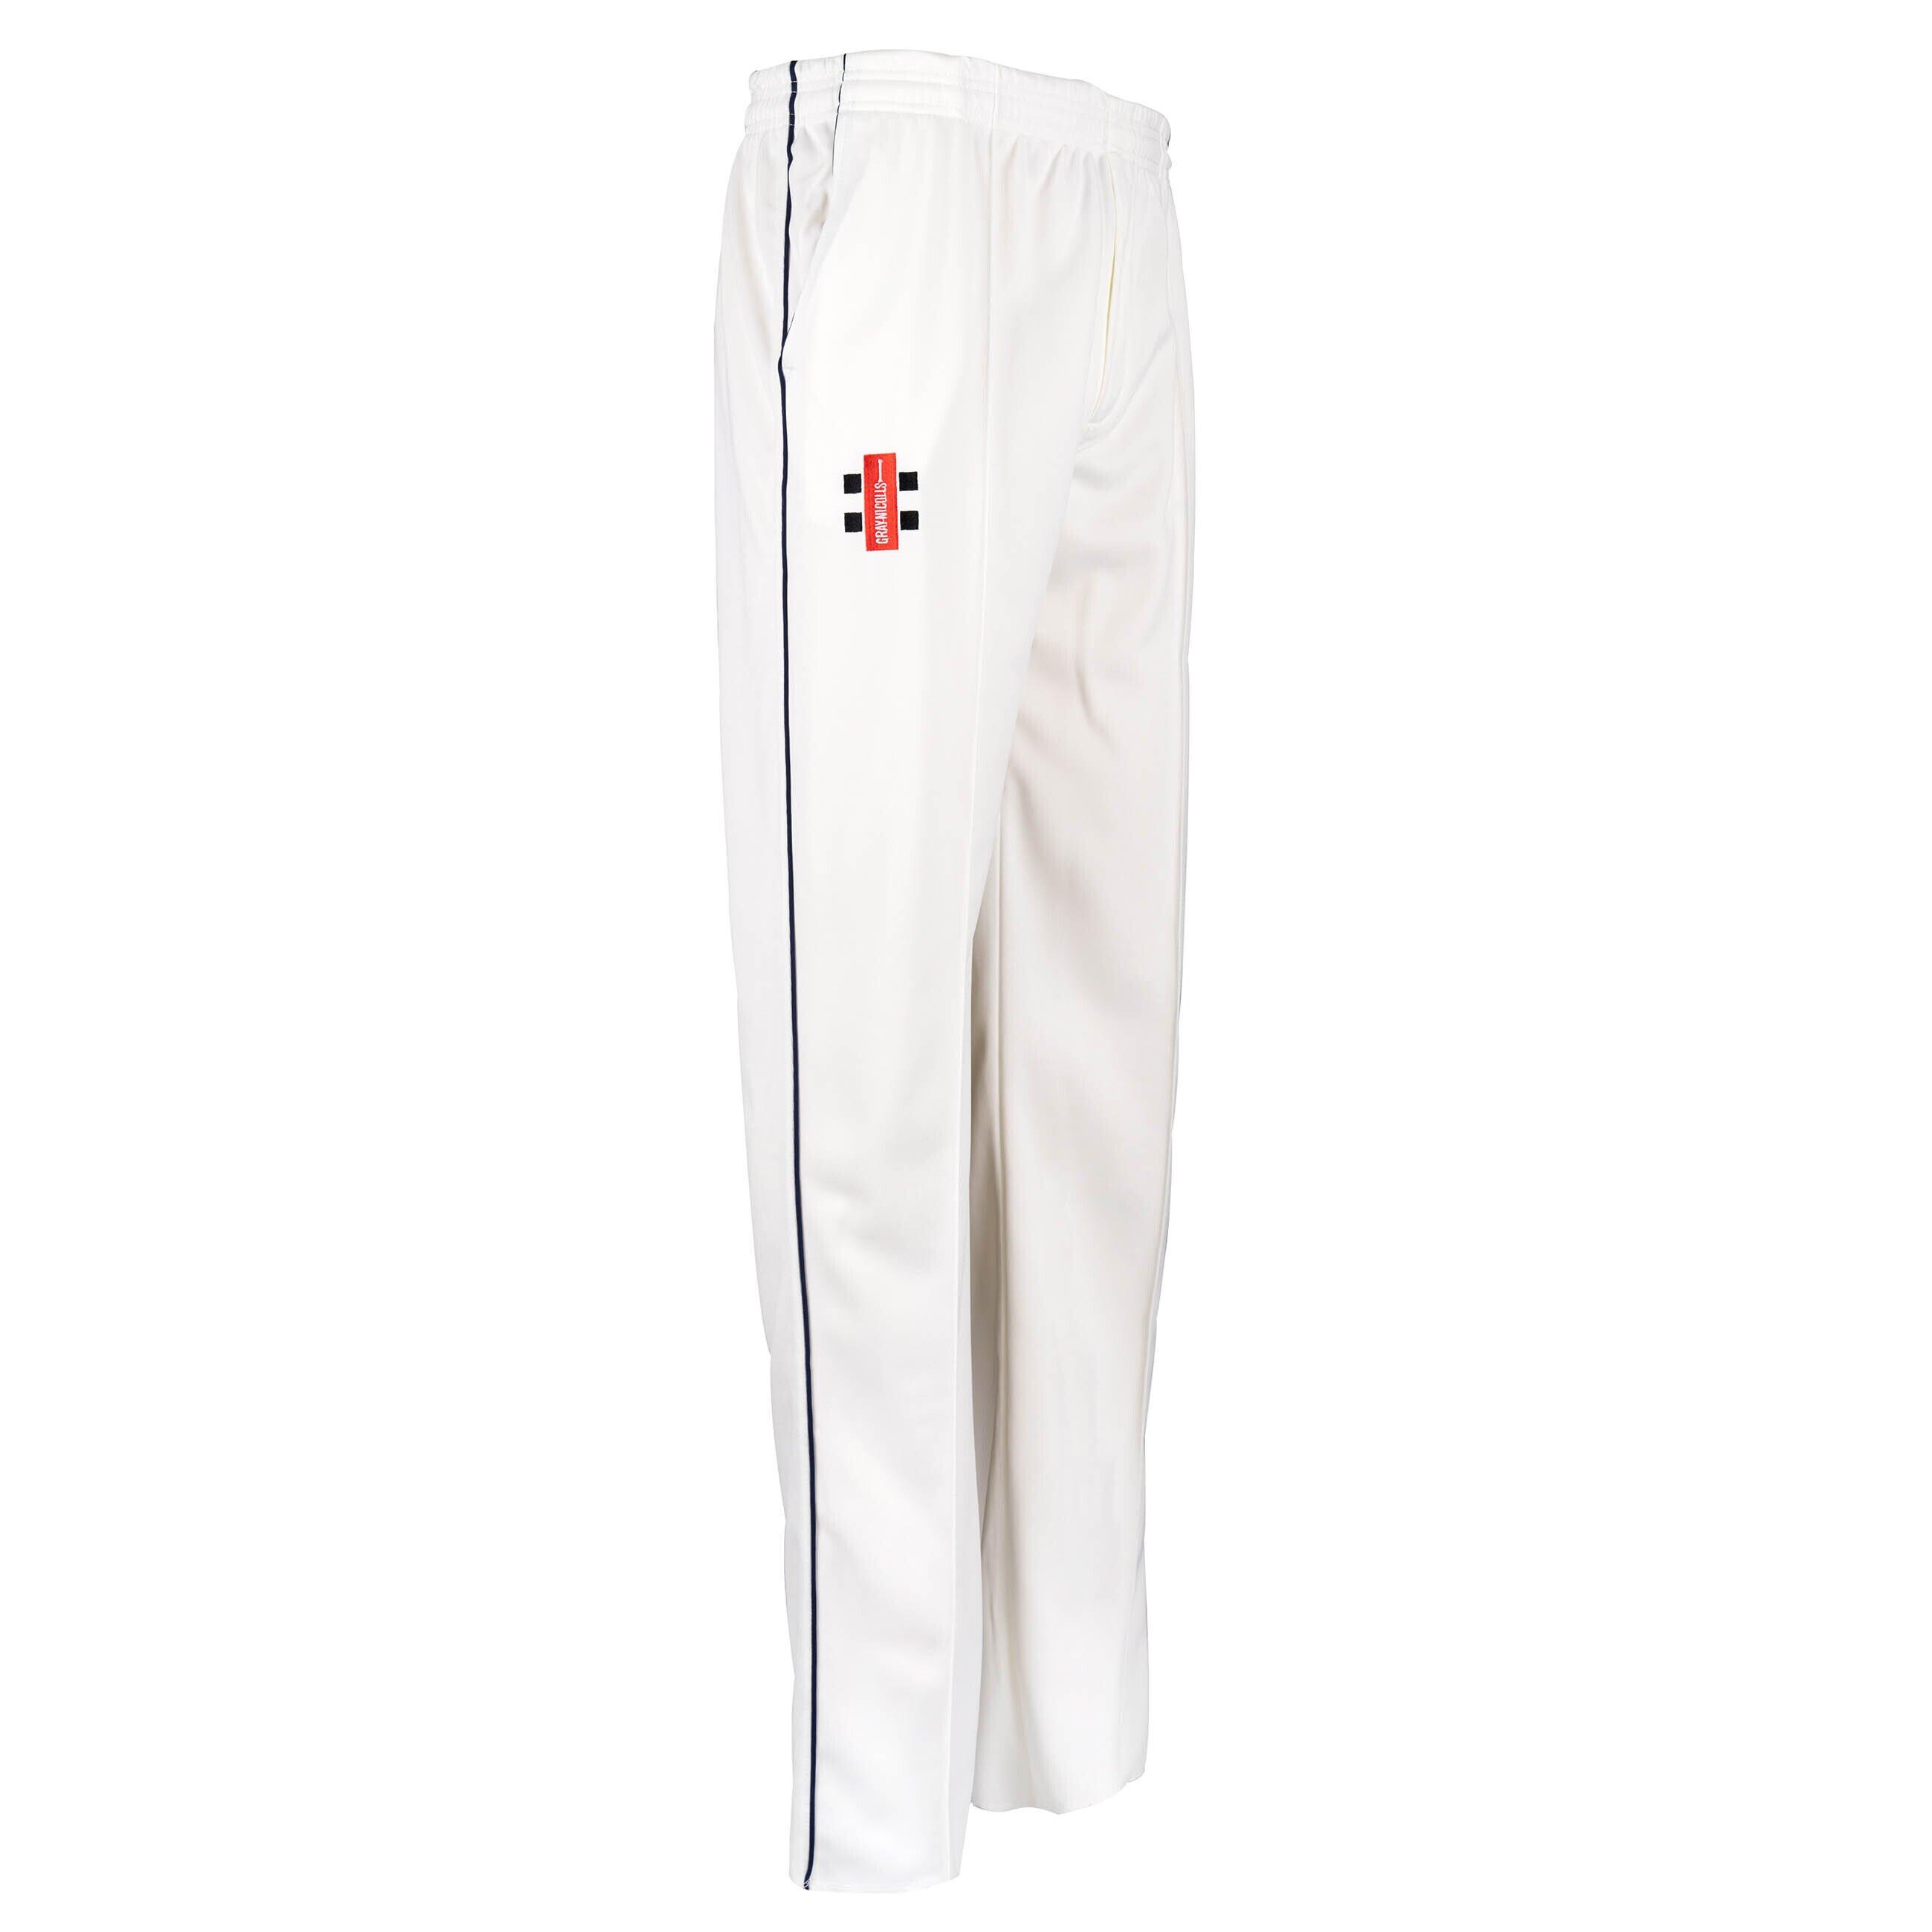 GRAY-NICOLLS Matrix V2 Men's Trousers,  Ivory / Navy